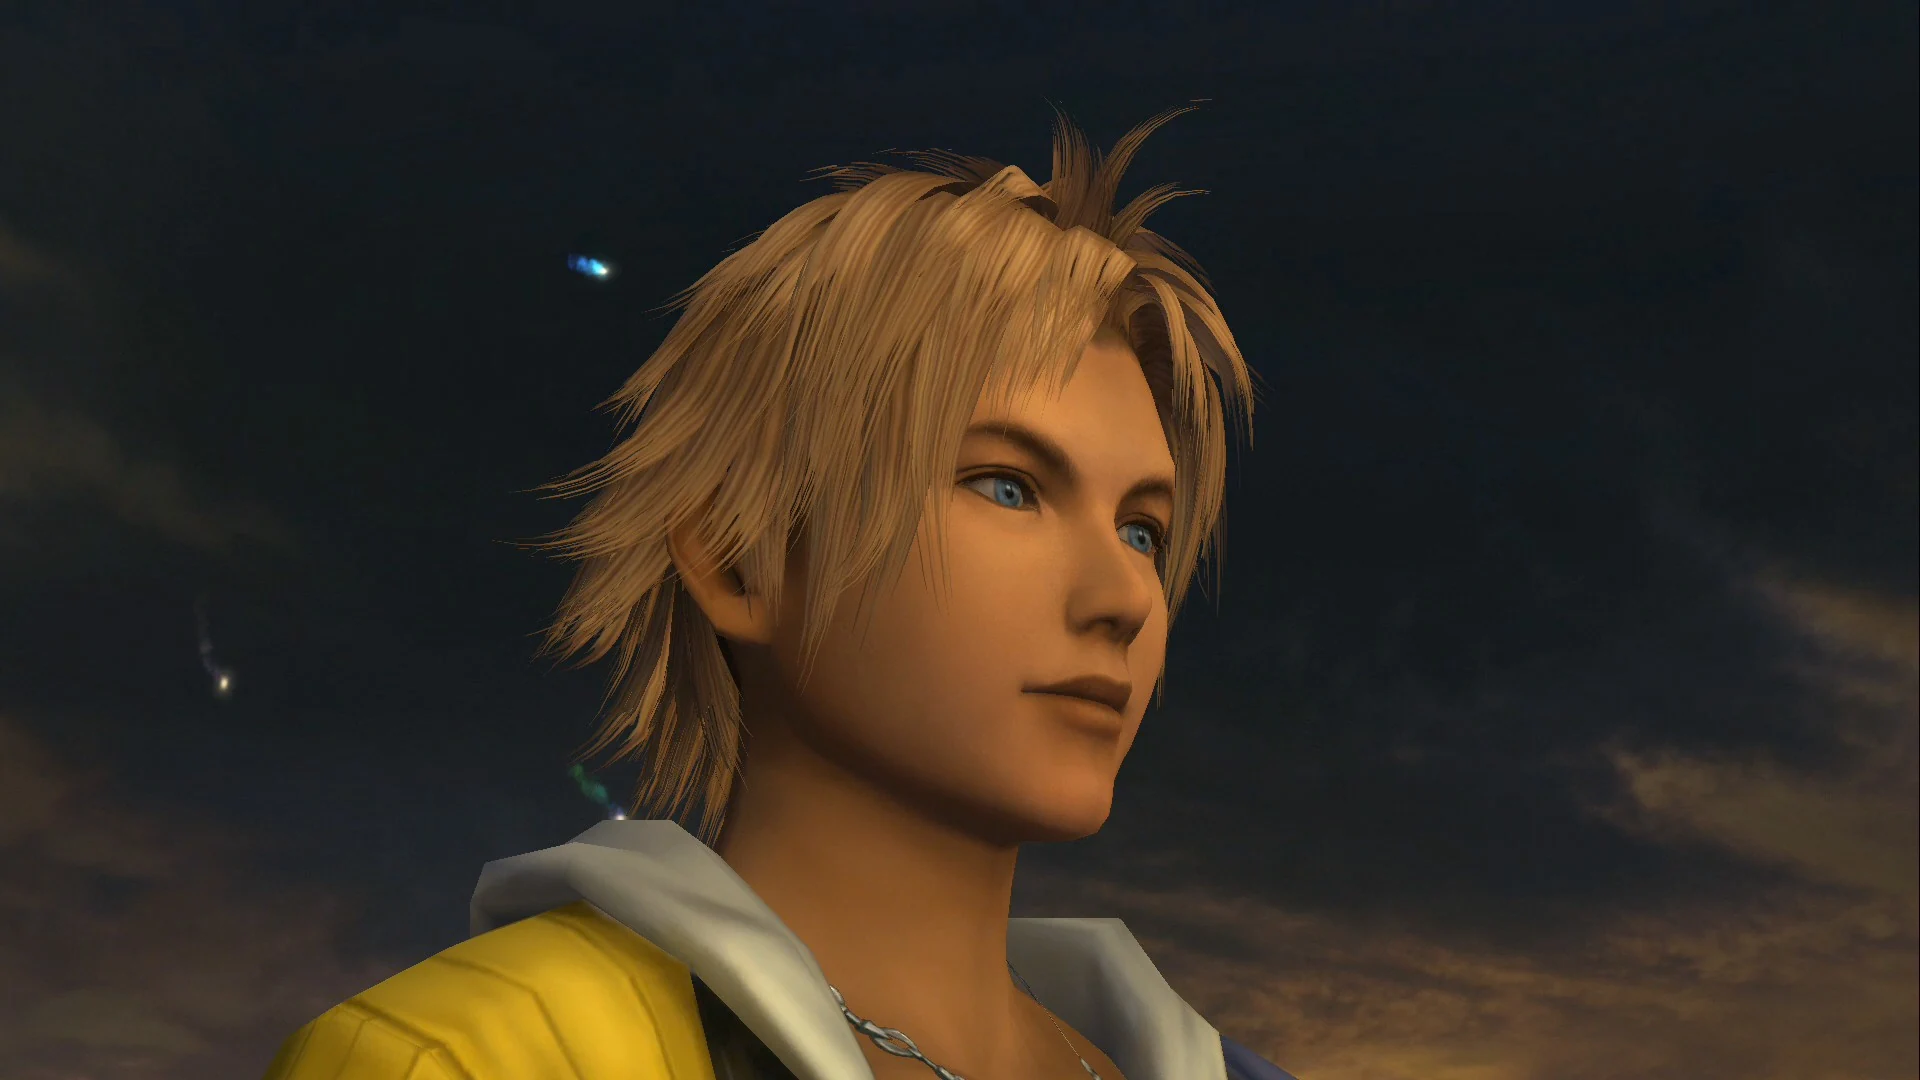 Final Fantasy X HD Screenshot - Tidus